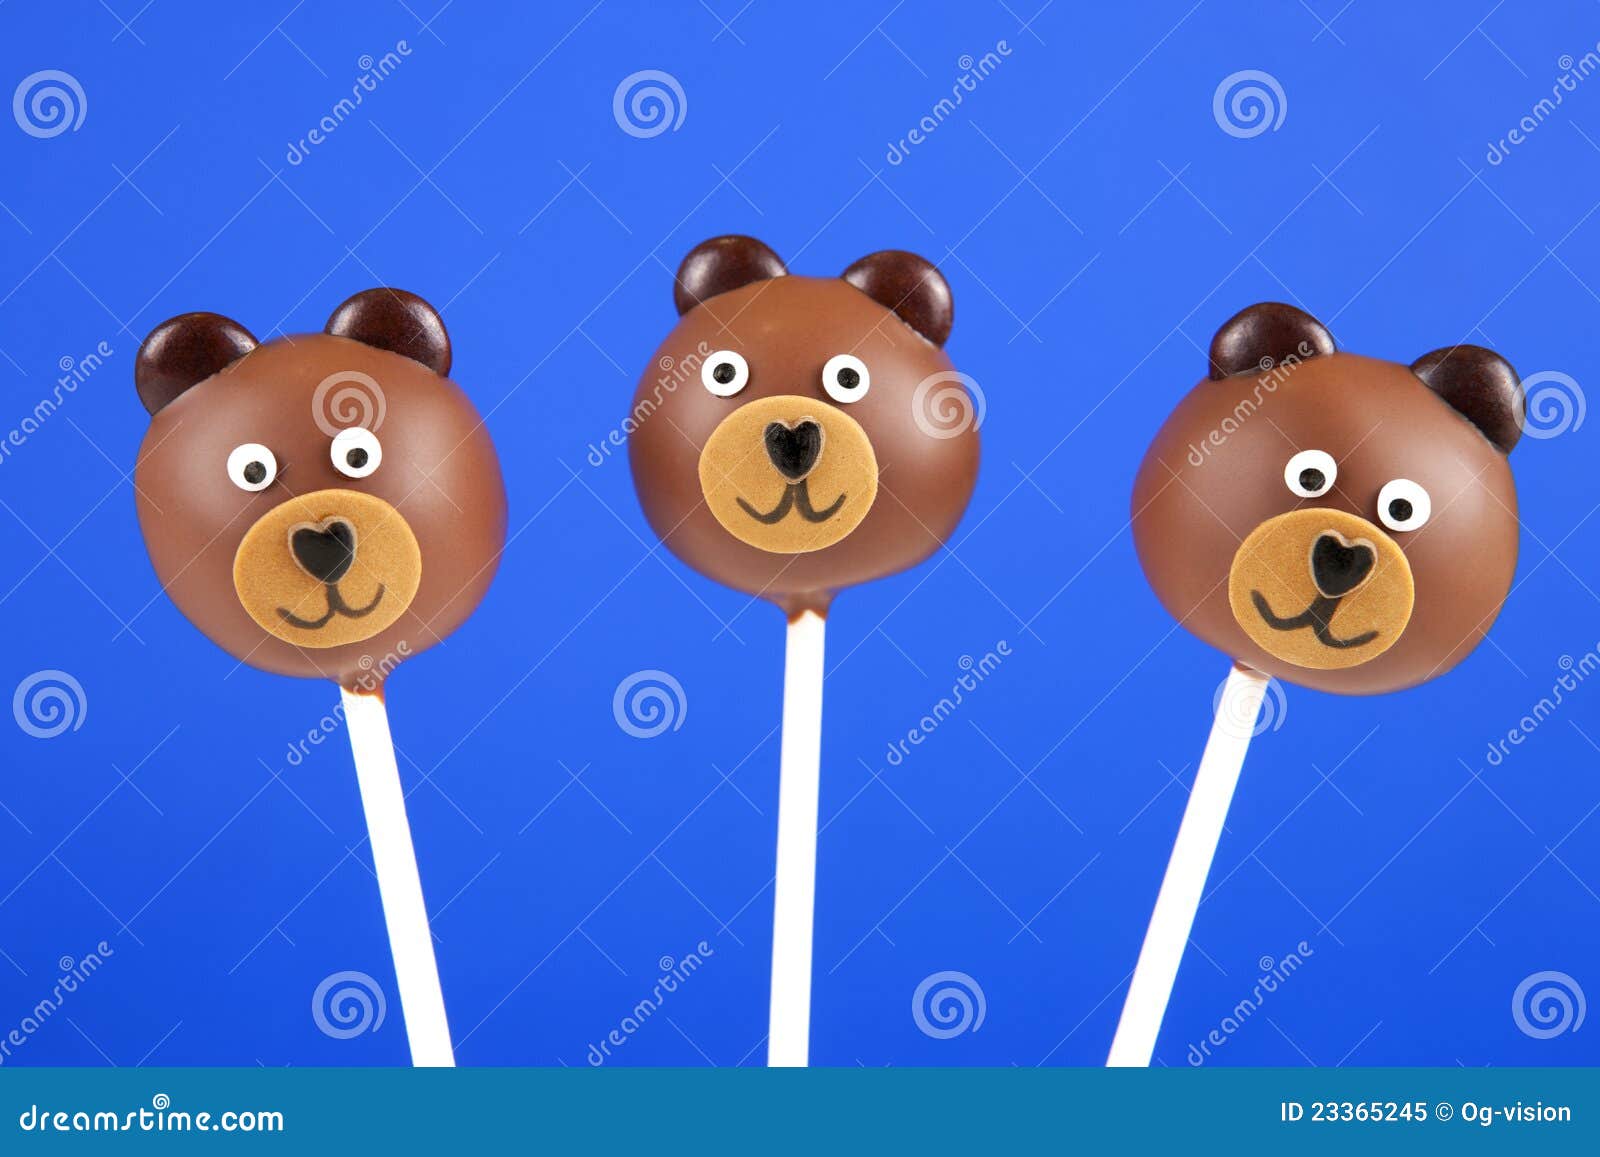 Bear cake pops stock image. Image of animals, lollipop - 23365245